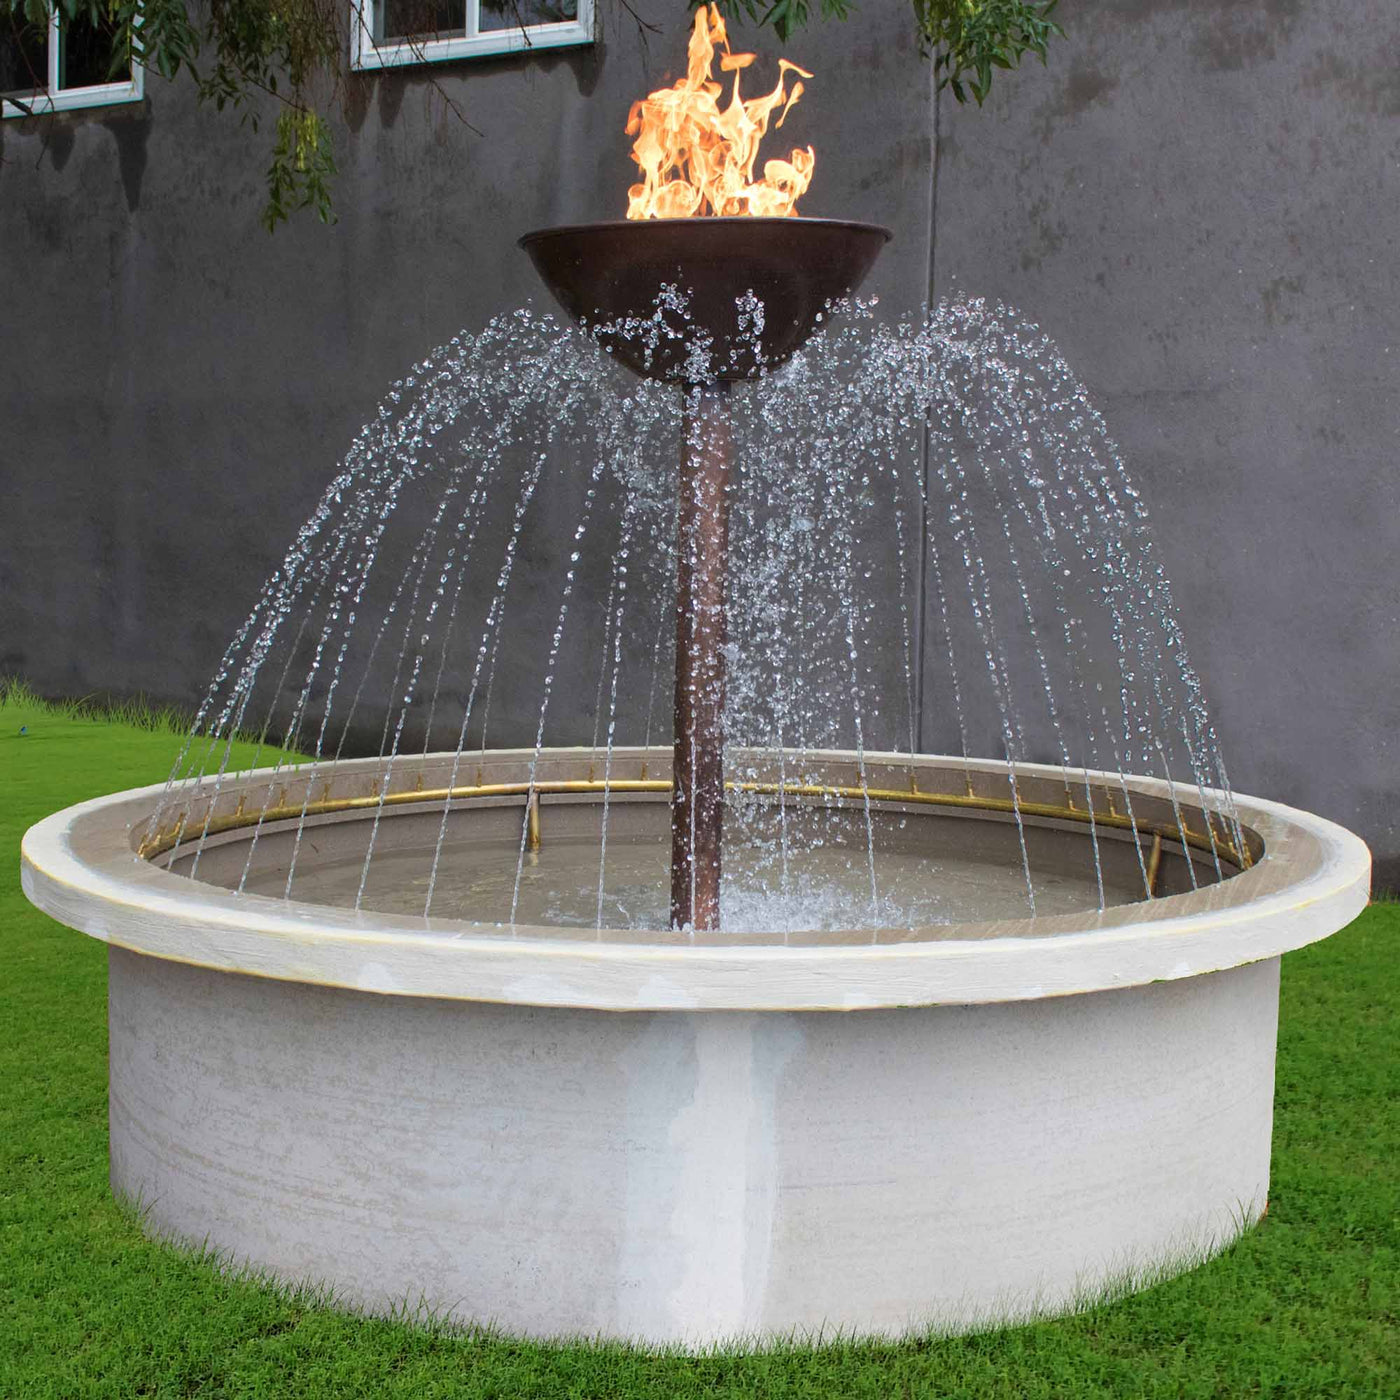 The Outdoor Plus Osiris Fire & Water Fountain